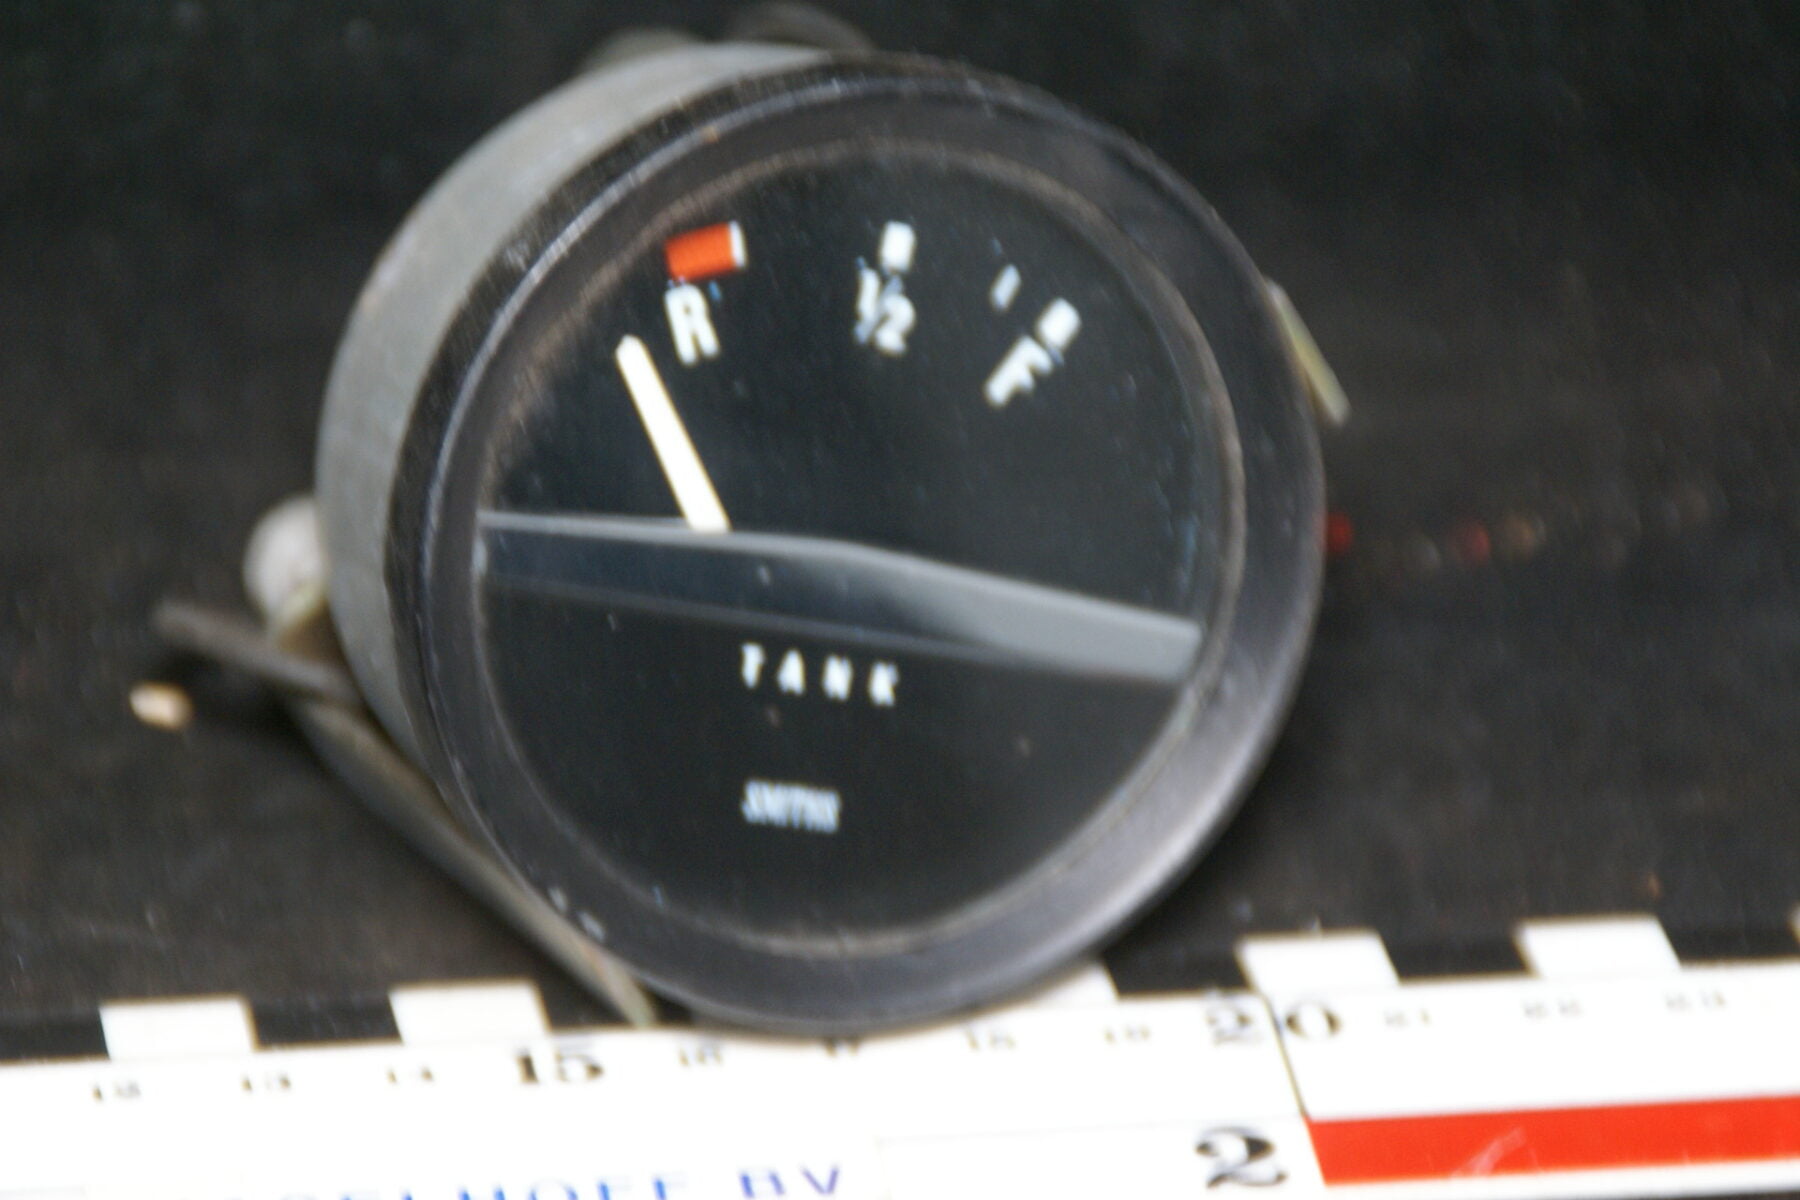 tankmeter 180613-5541-0